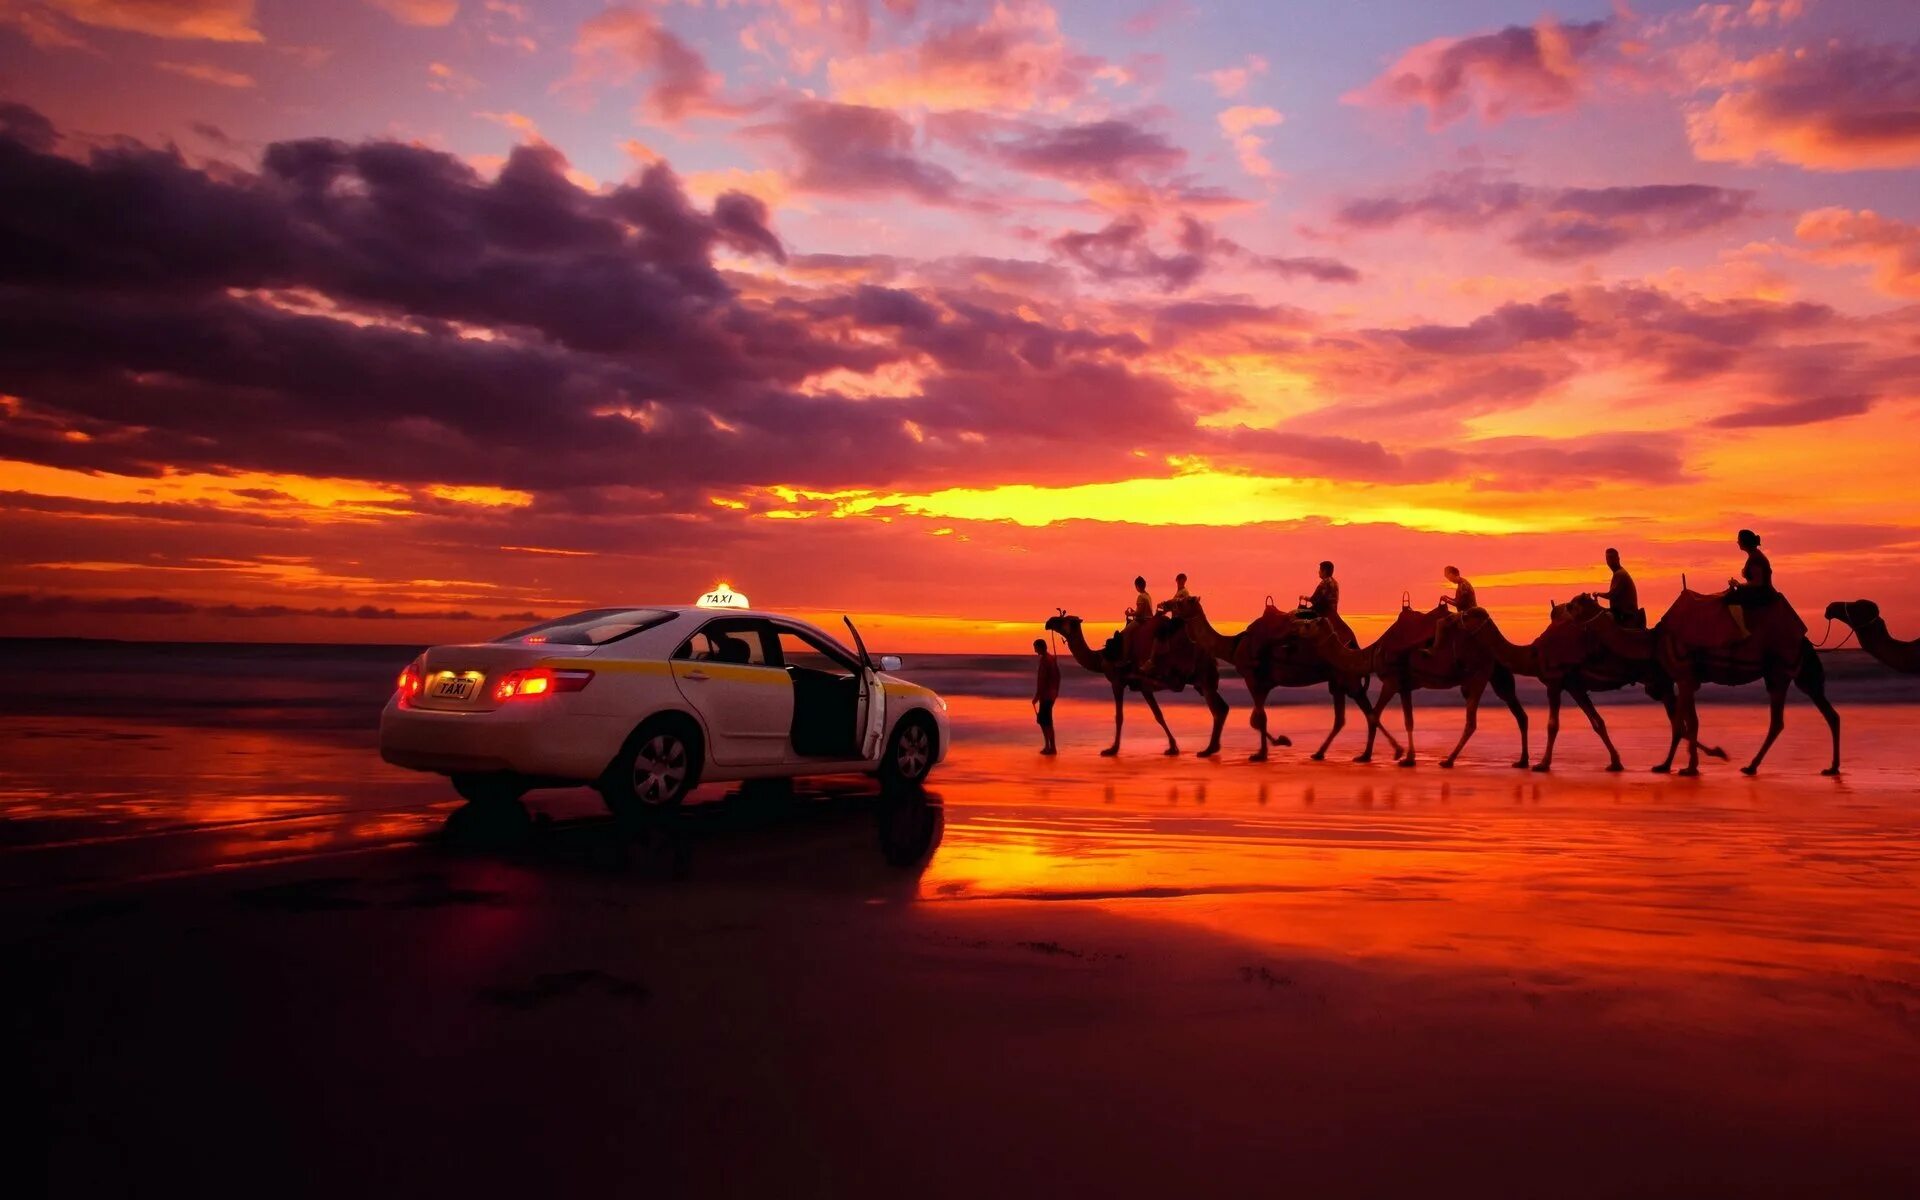 Машина на фоне заката. Верблюд в пустыне. Закат в пустыне. Караван на закате. Едет караван